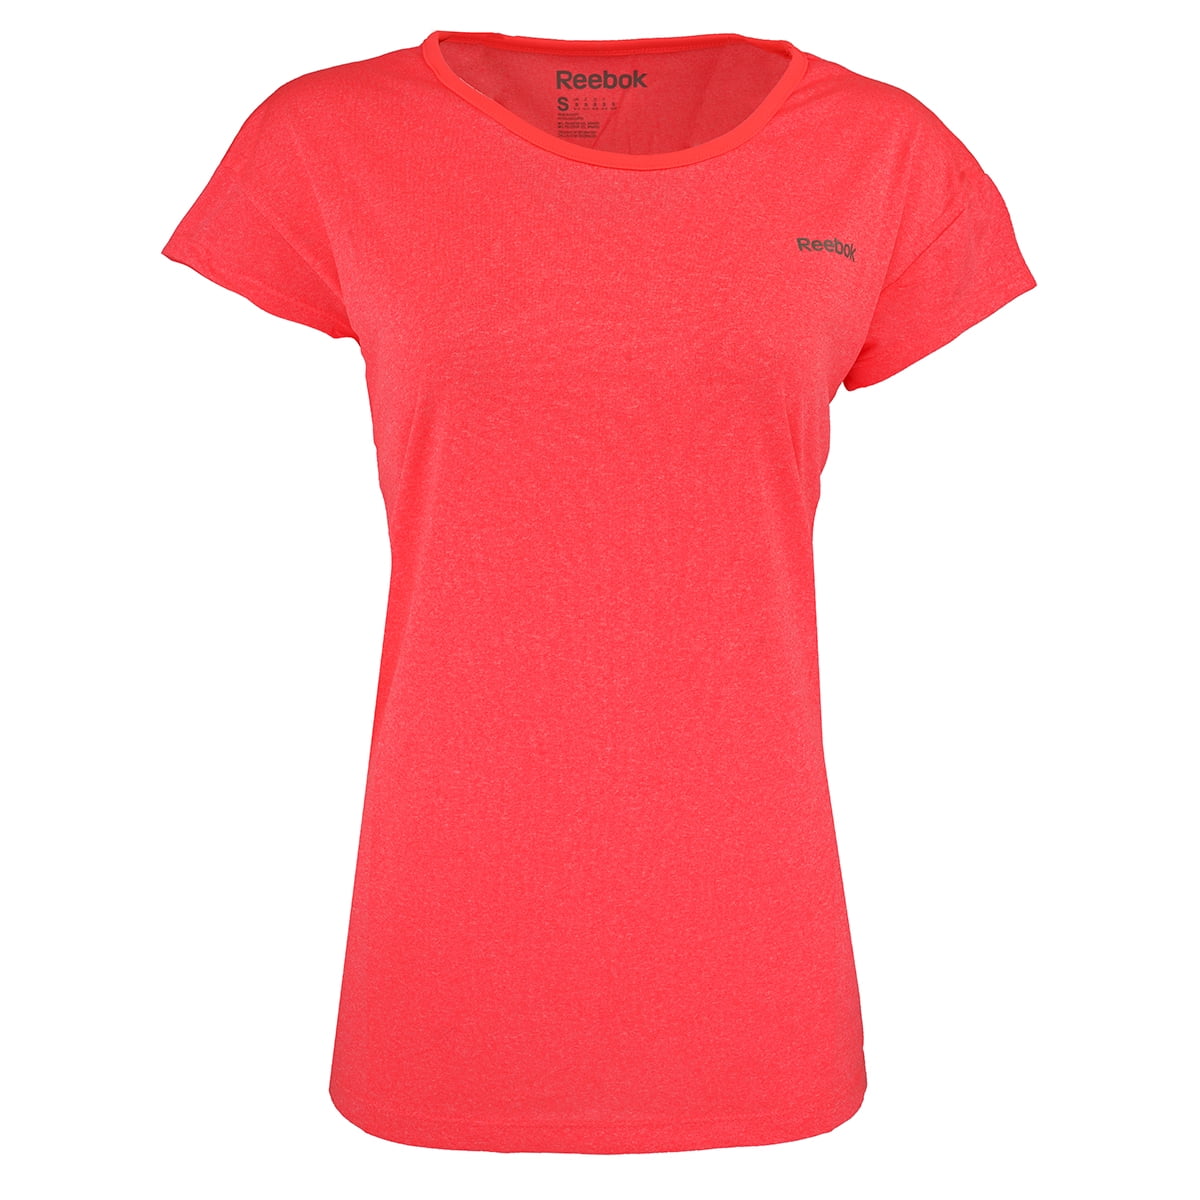 reebok women's workout shirts